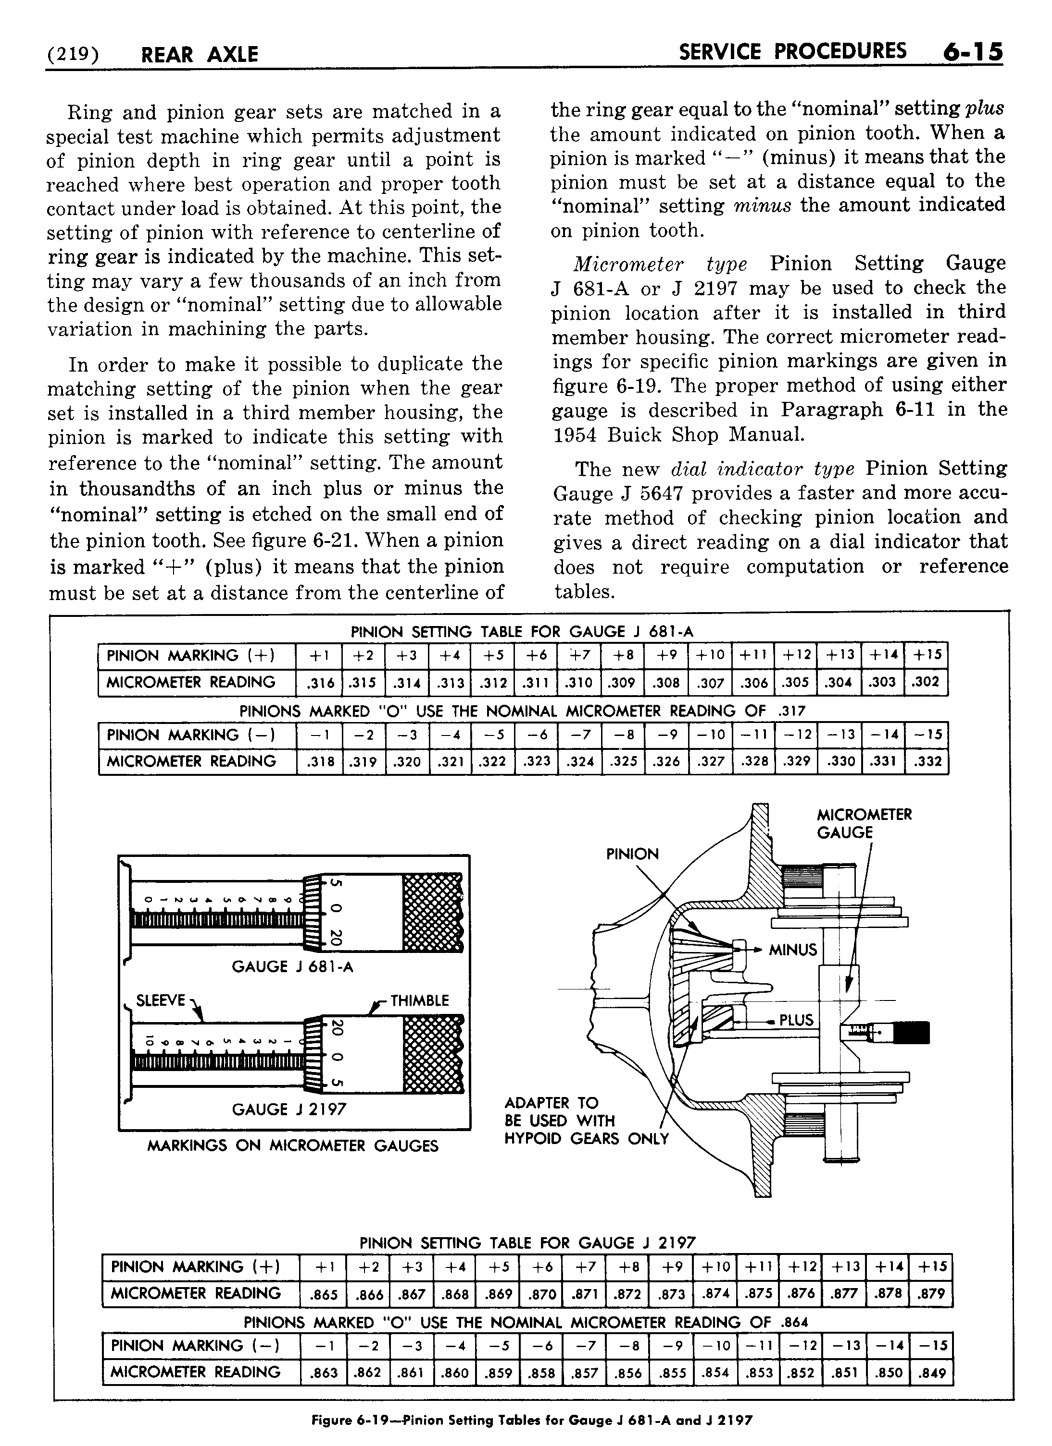 n_07 1955 Buick Shop Manual - Rear Axle-015-015.jpg